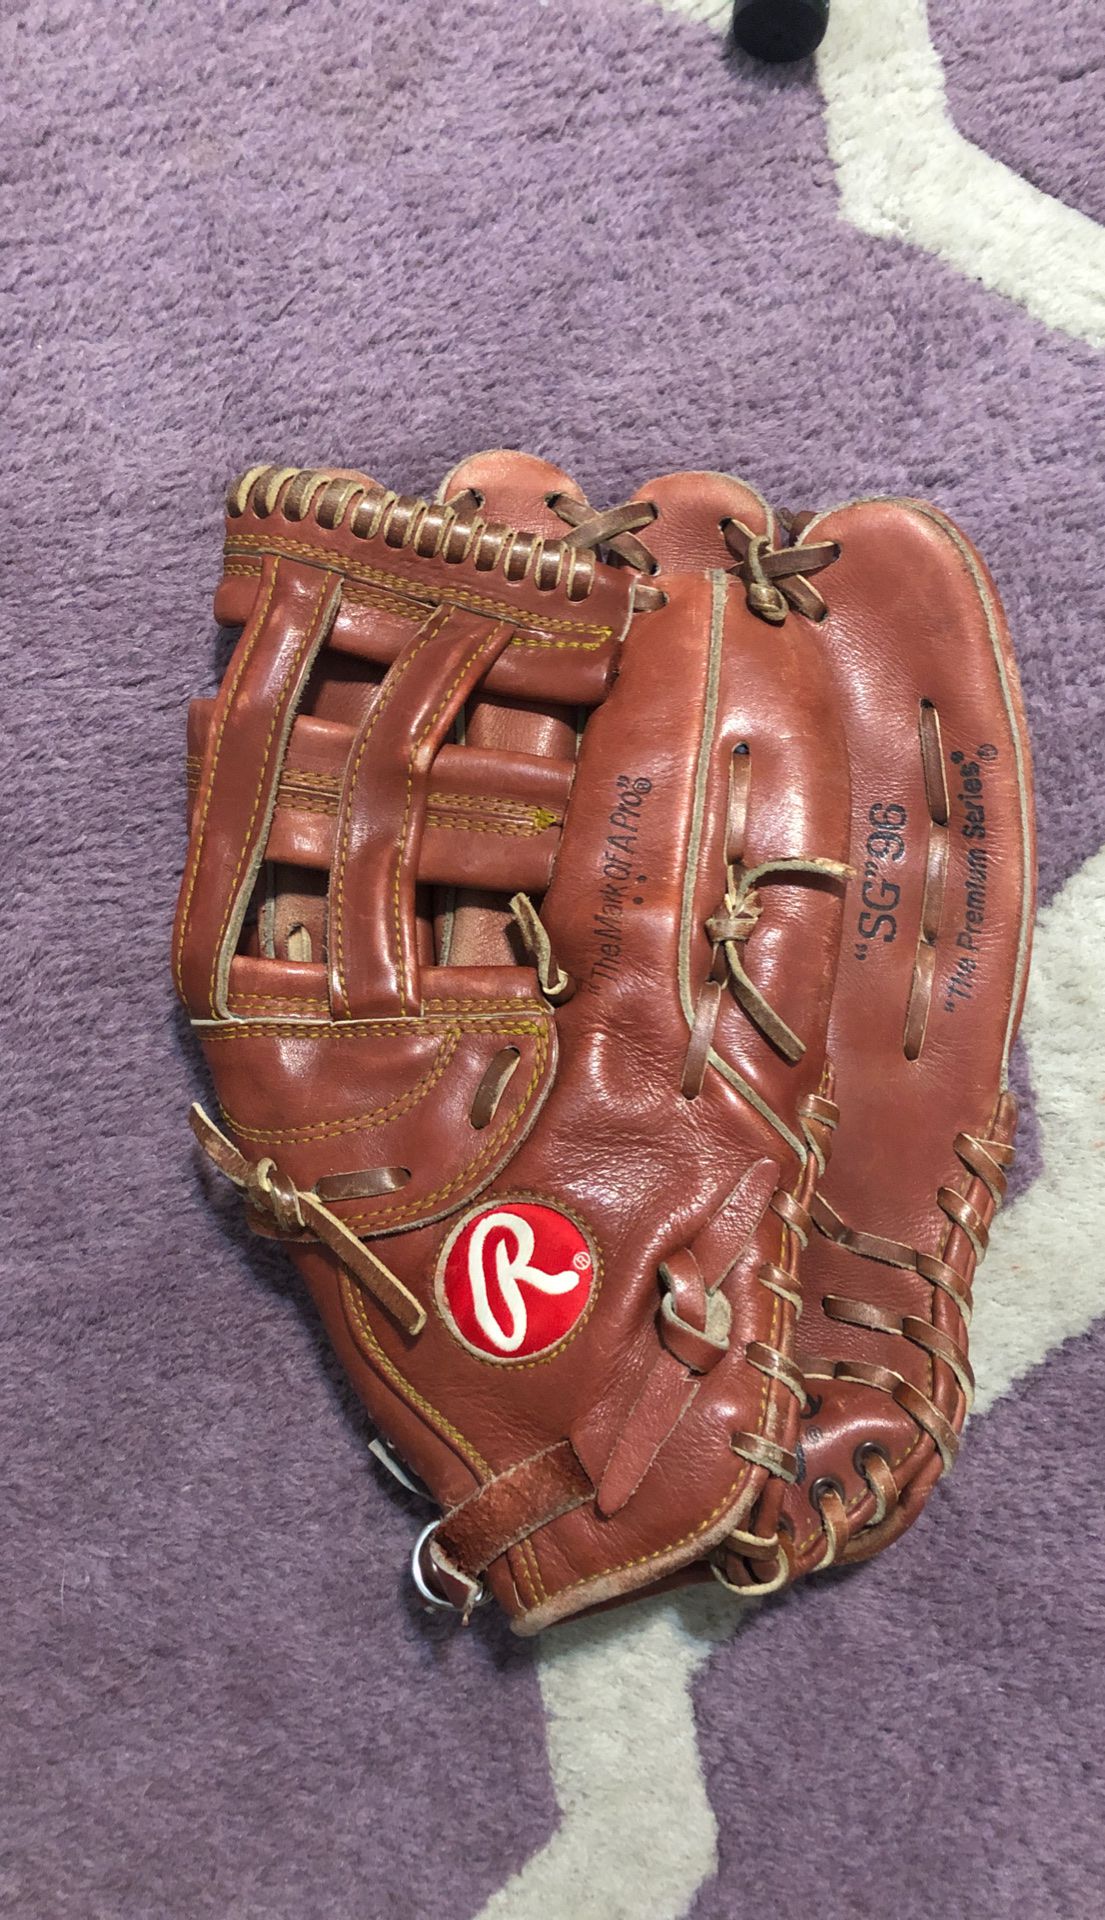 Rawlings sg96 baseball/softball glove made in japan